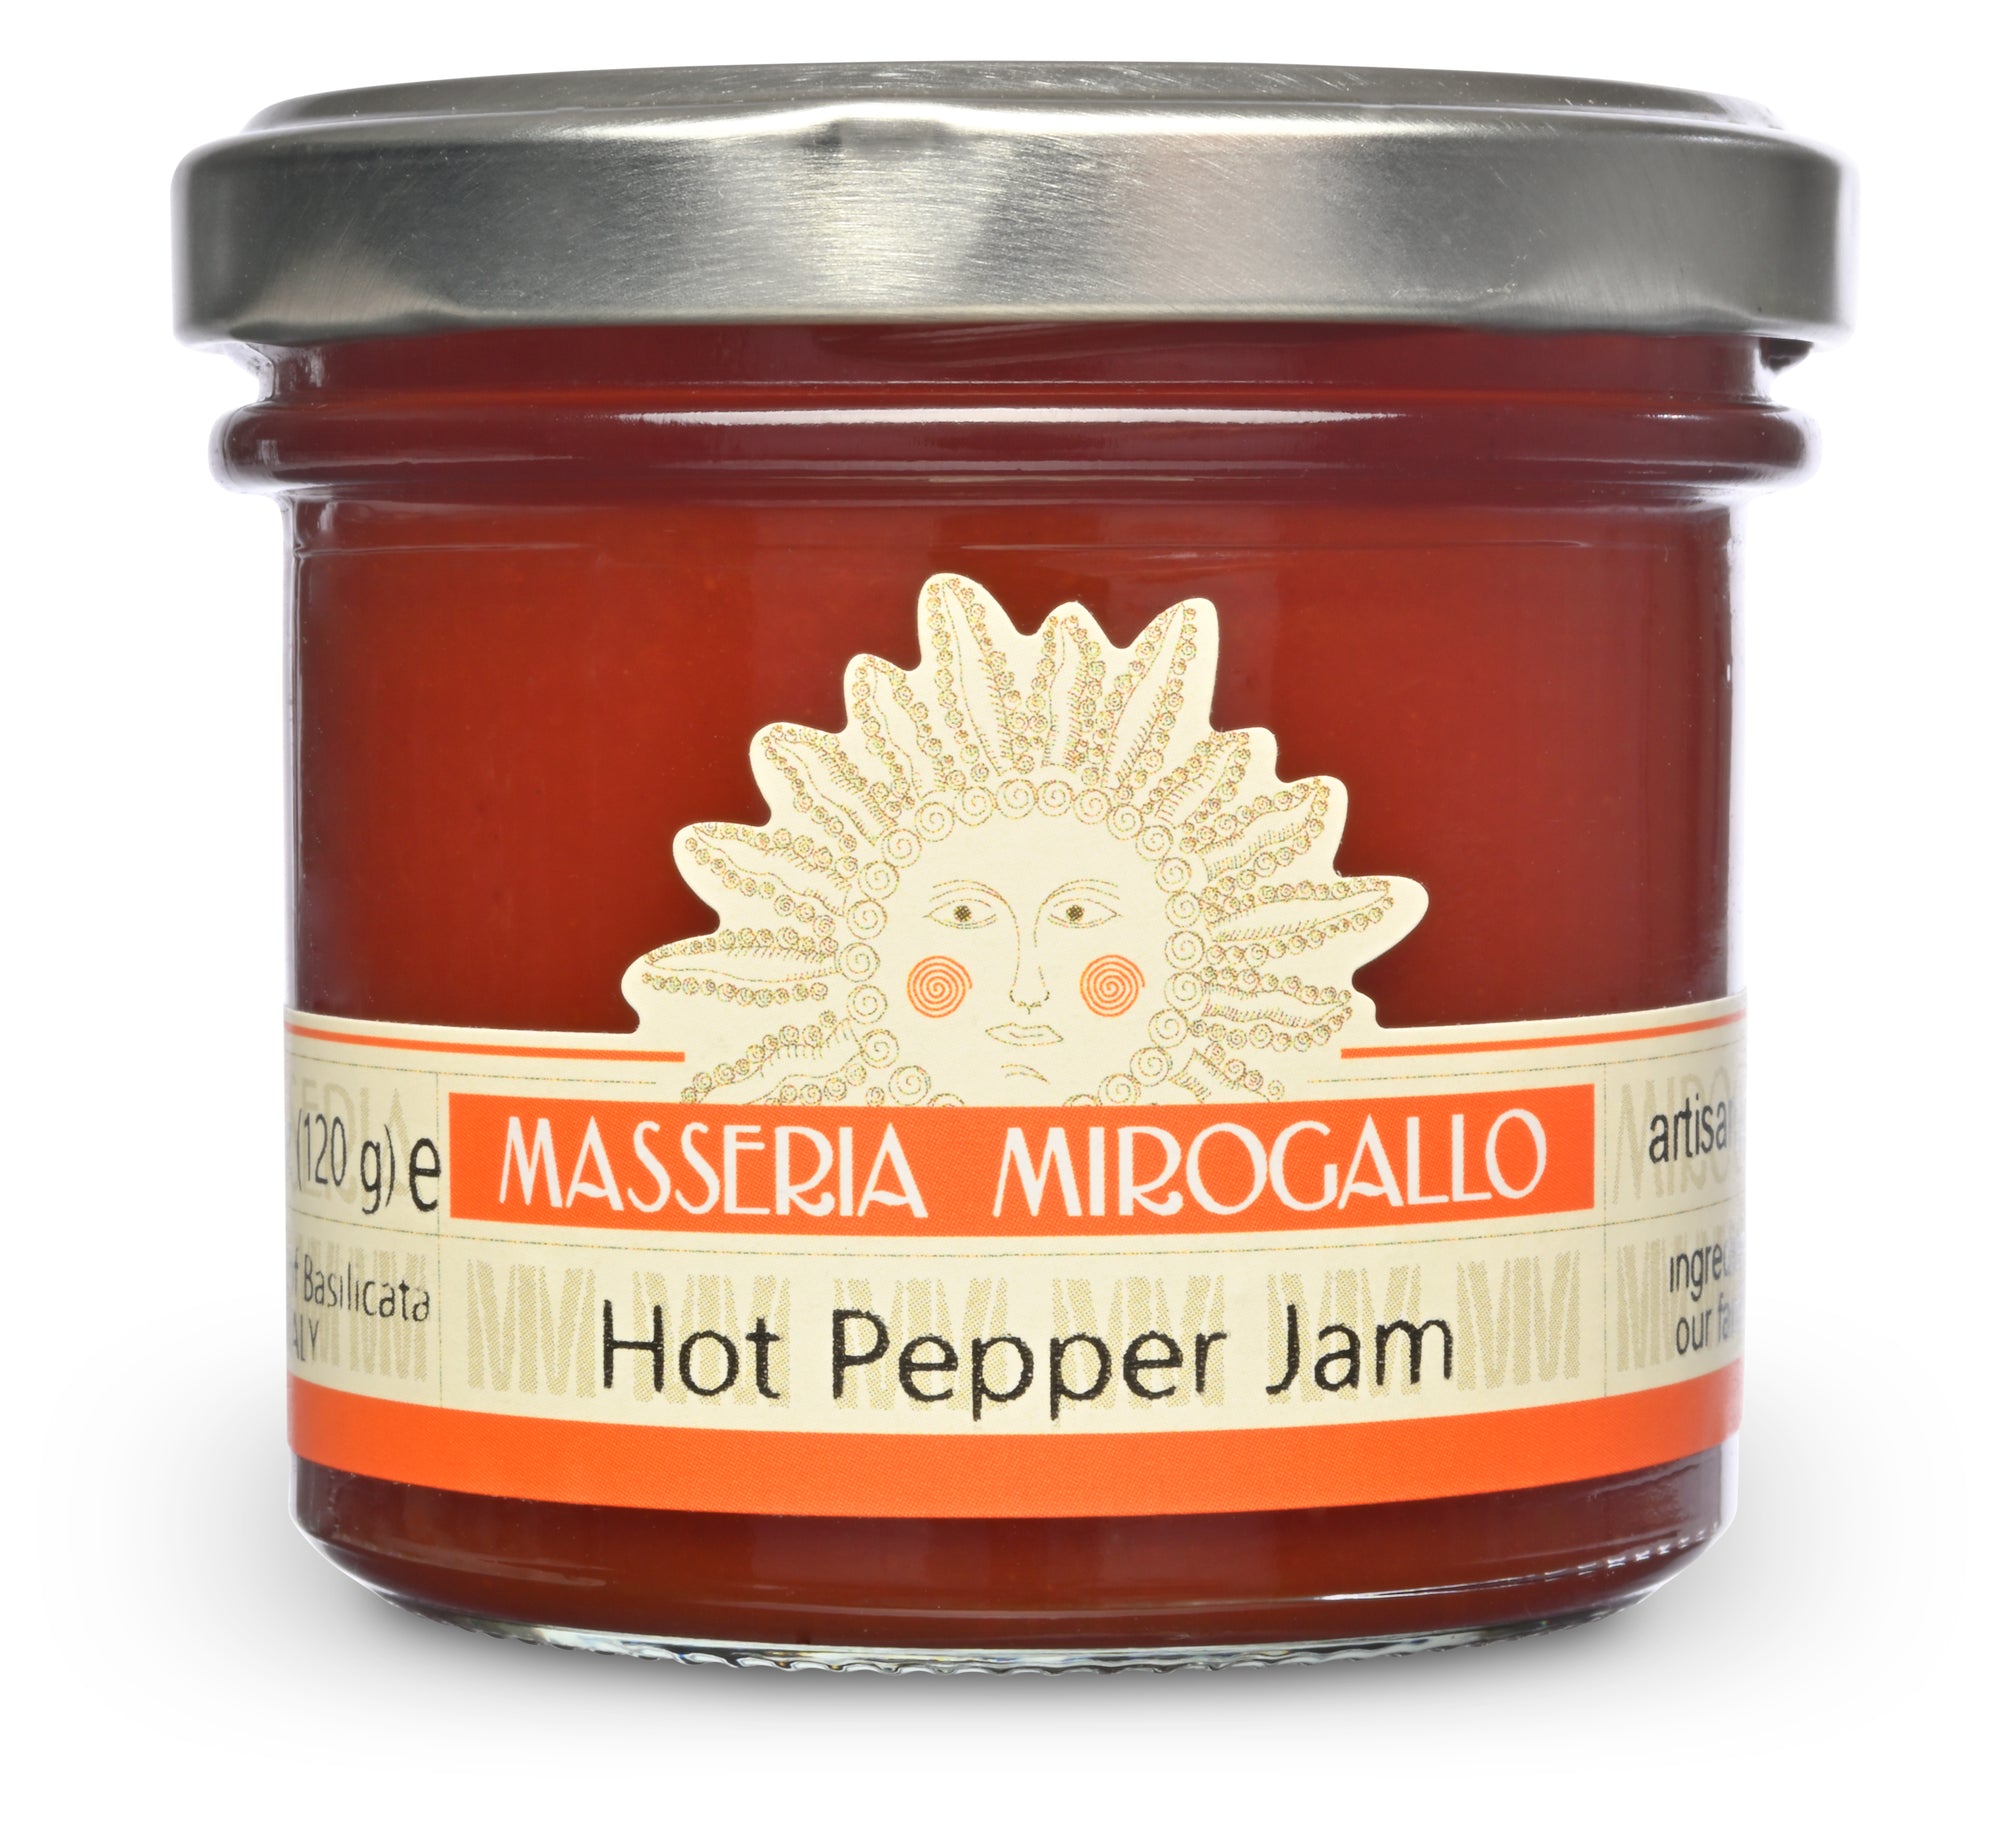 Masseria Mirogallo Hot Pepper Jam 120g